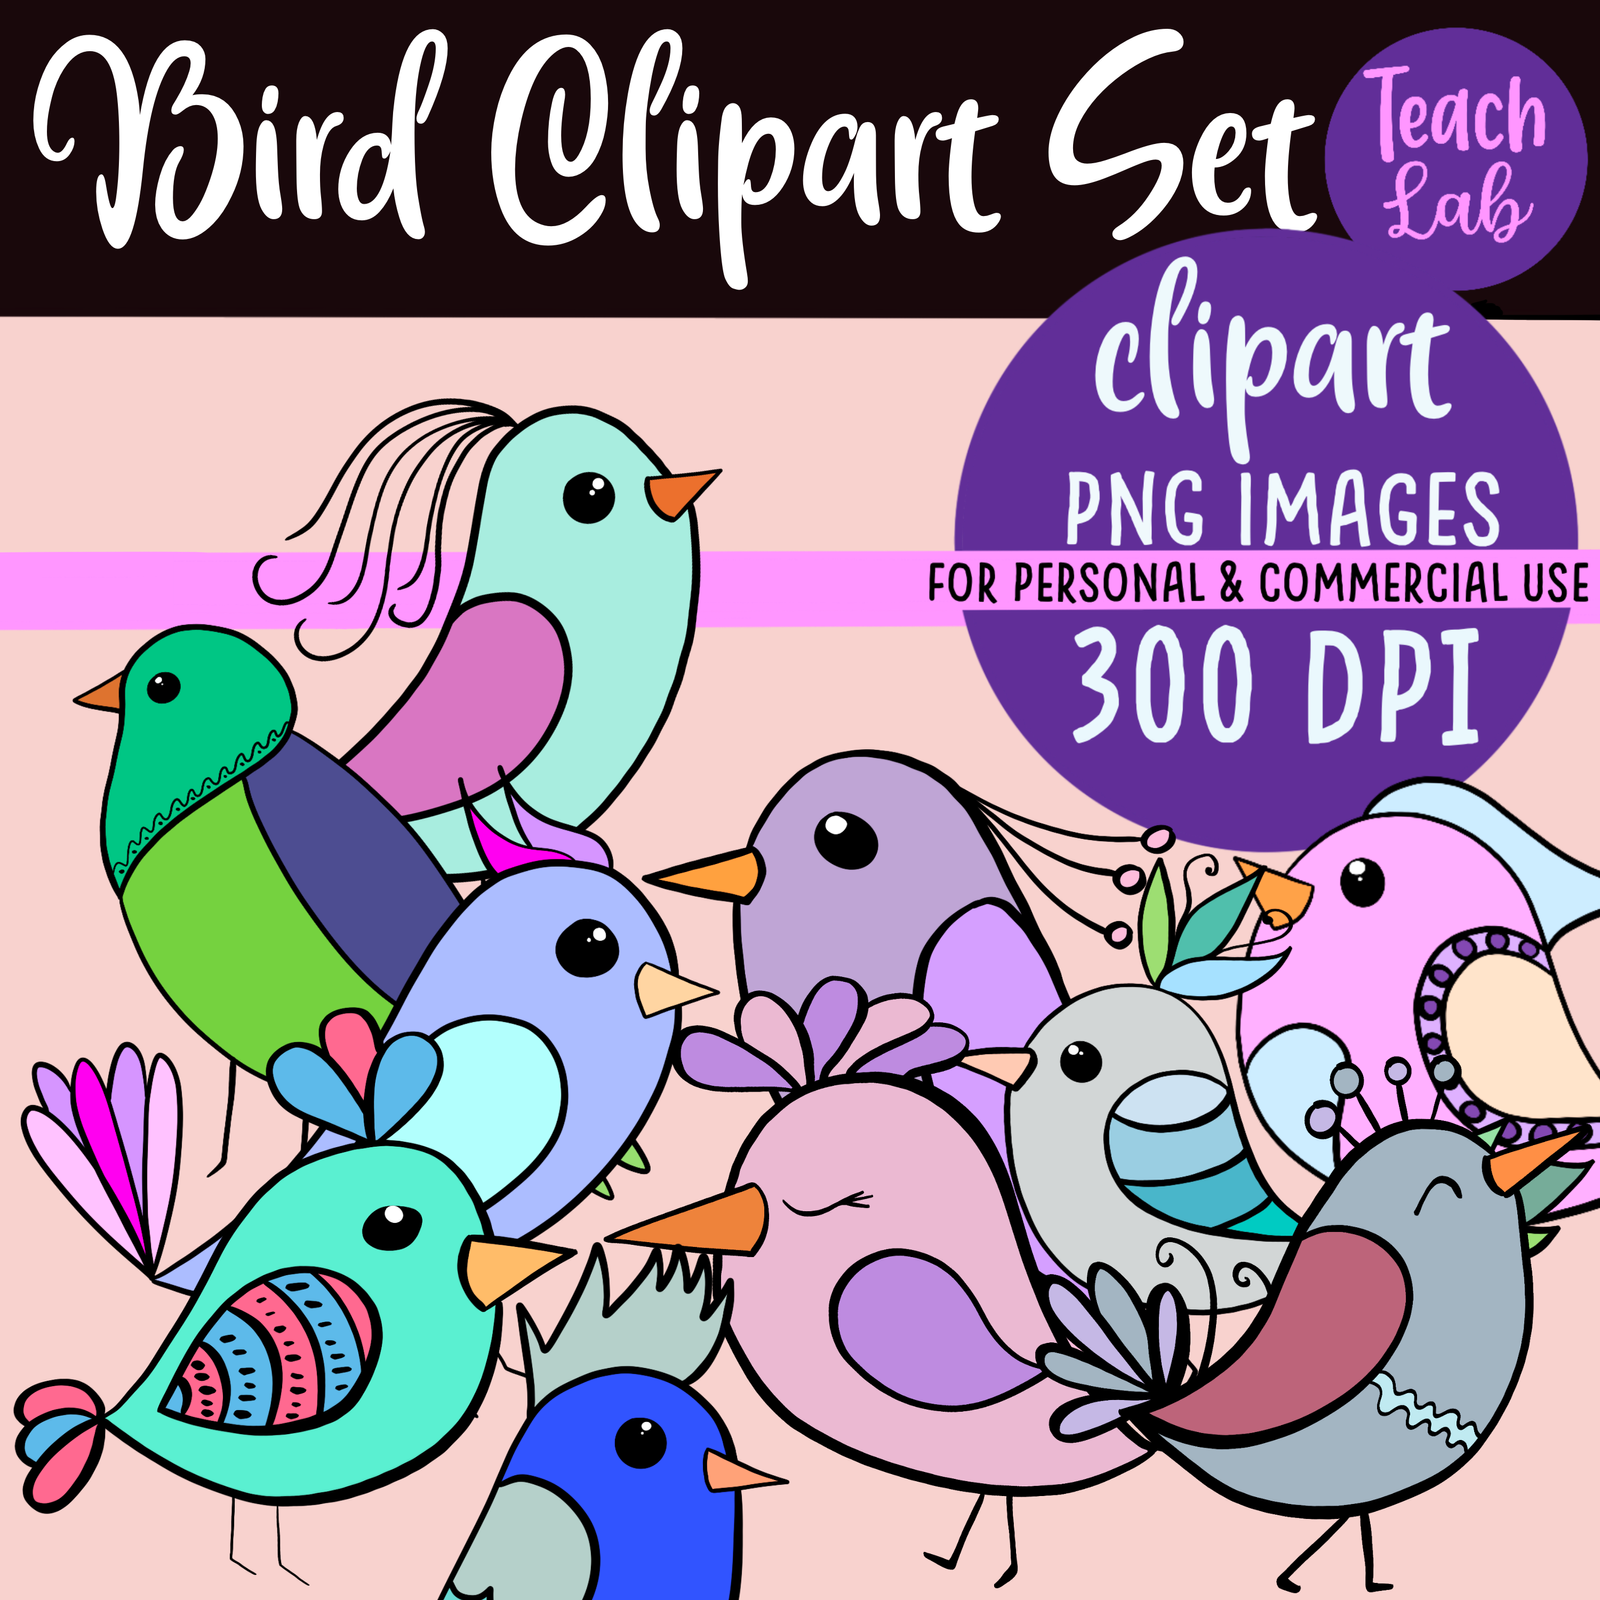 Colourful bird clipart set, PNG format, 300 DPI.